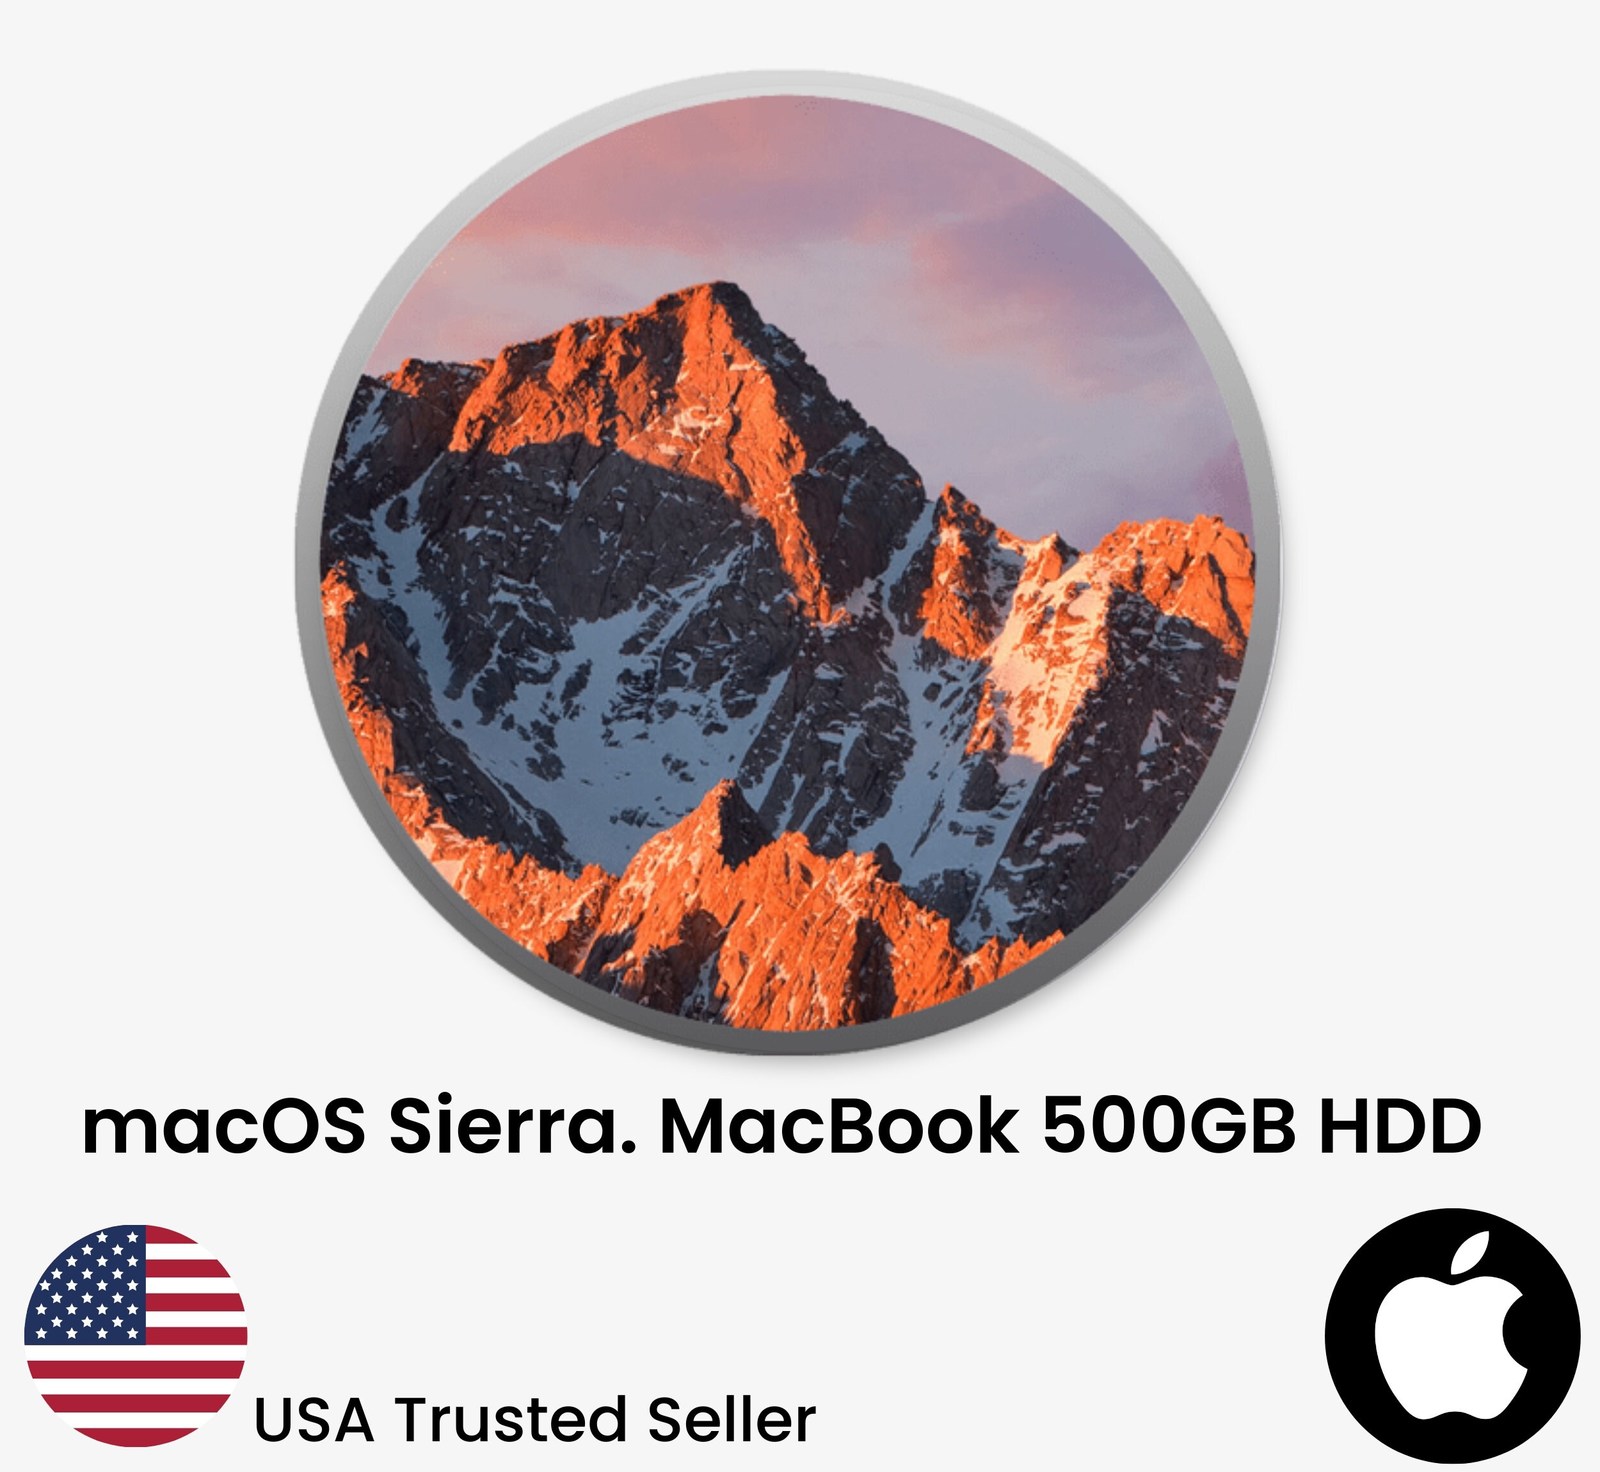 Mac OS X Sierra Hard Disk Drive 500GB 2.5" with Preinstalled  macOS Sierra - $29.99